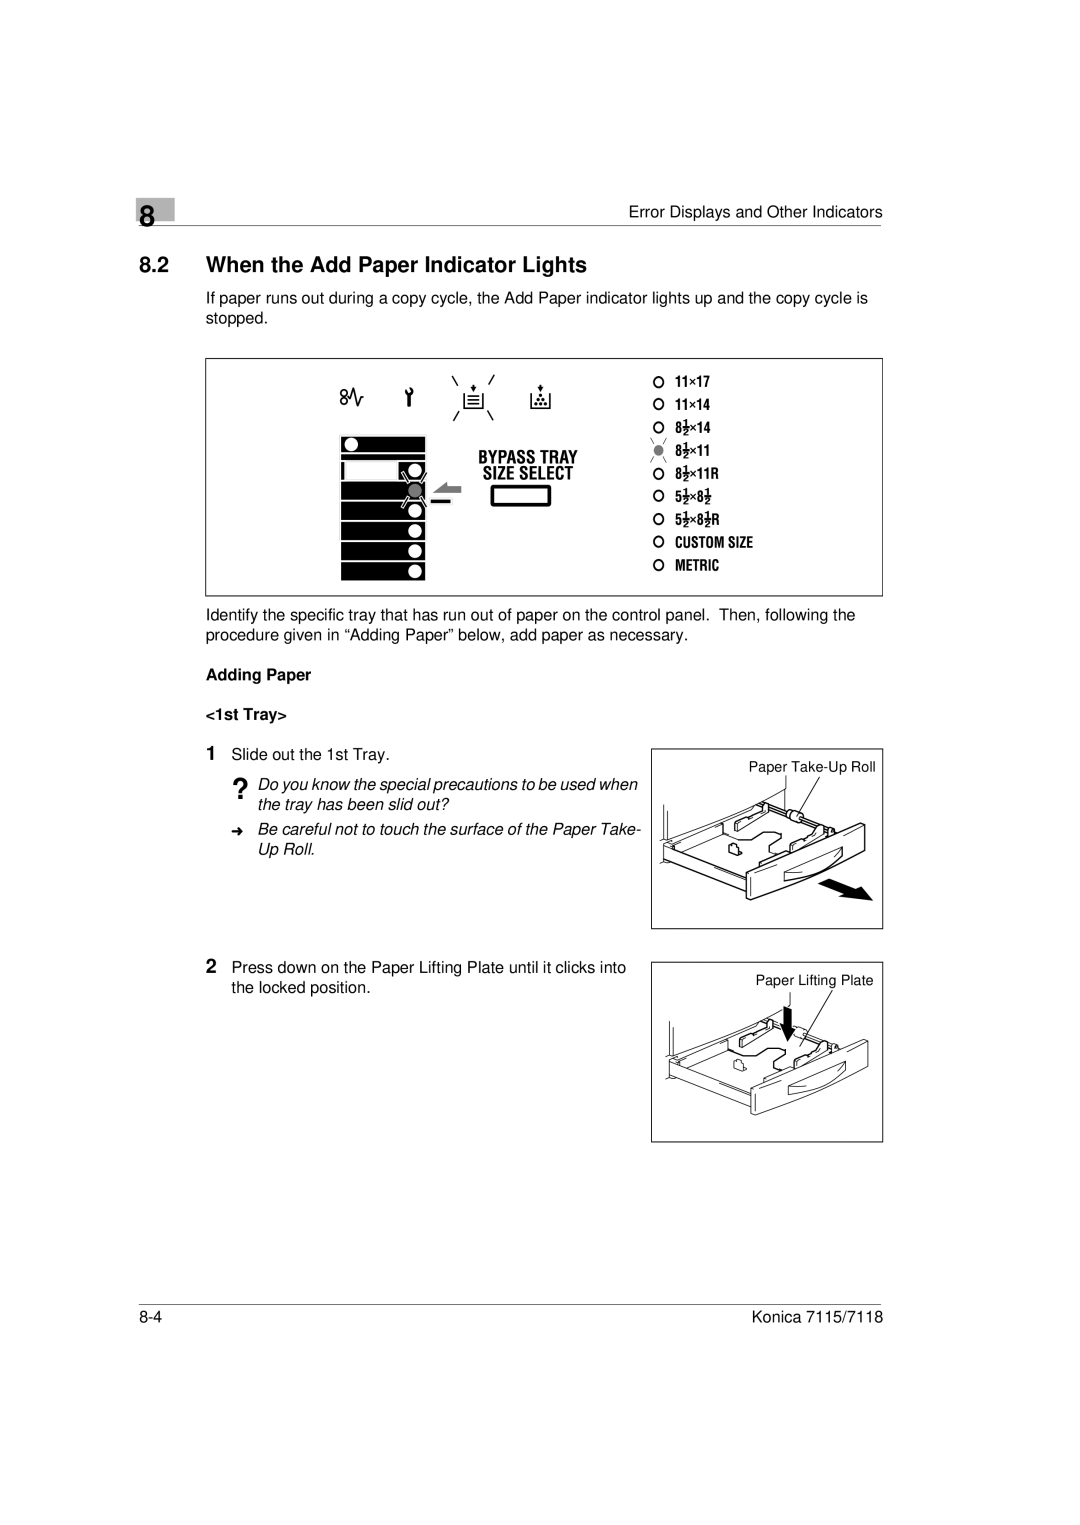 Konica Minolta Printer Copier manual When the Add Paper Indicator Lights, Adding Paper 1st Tray 